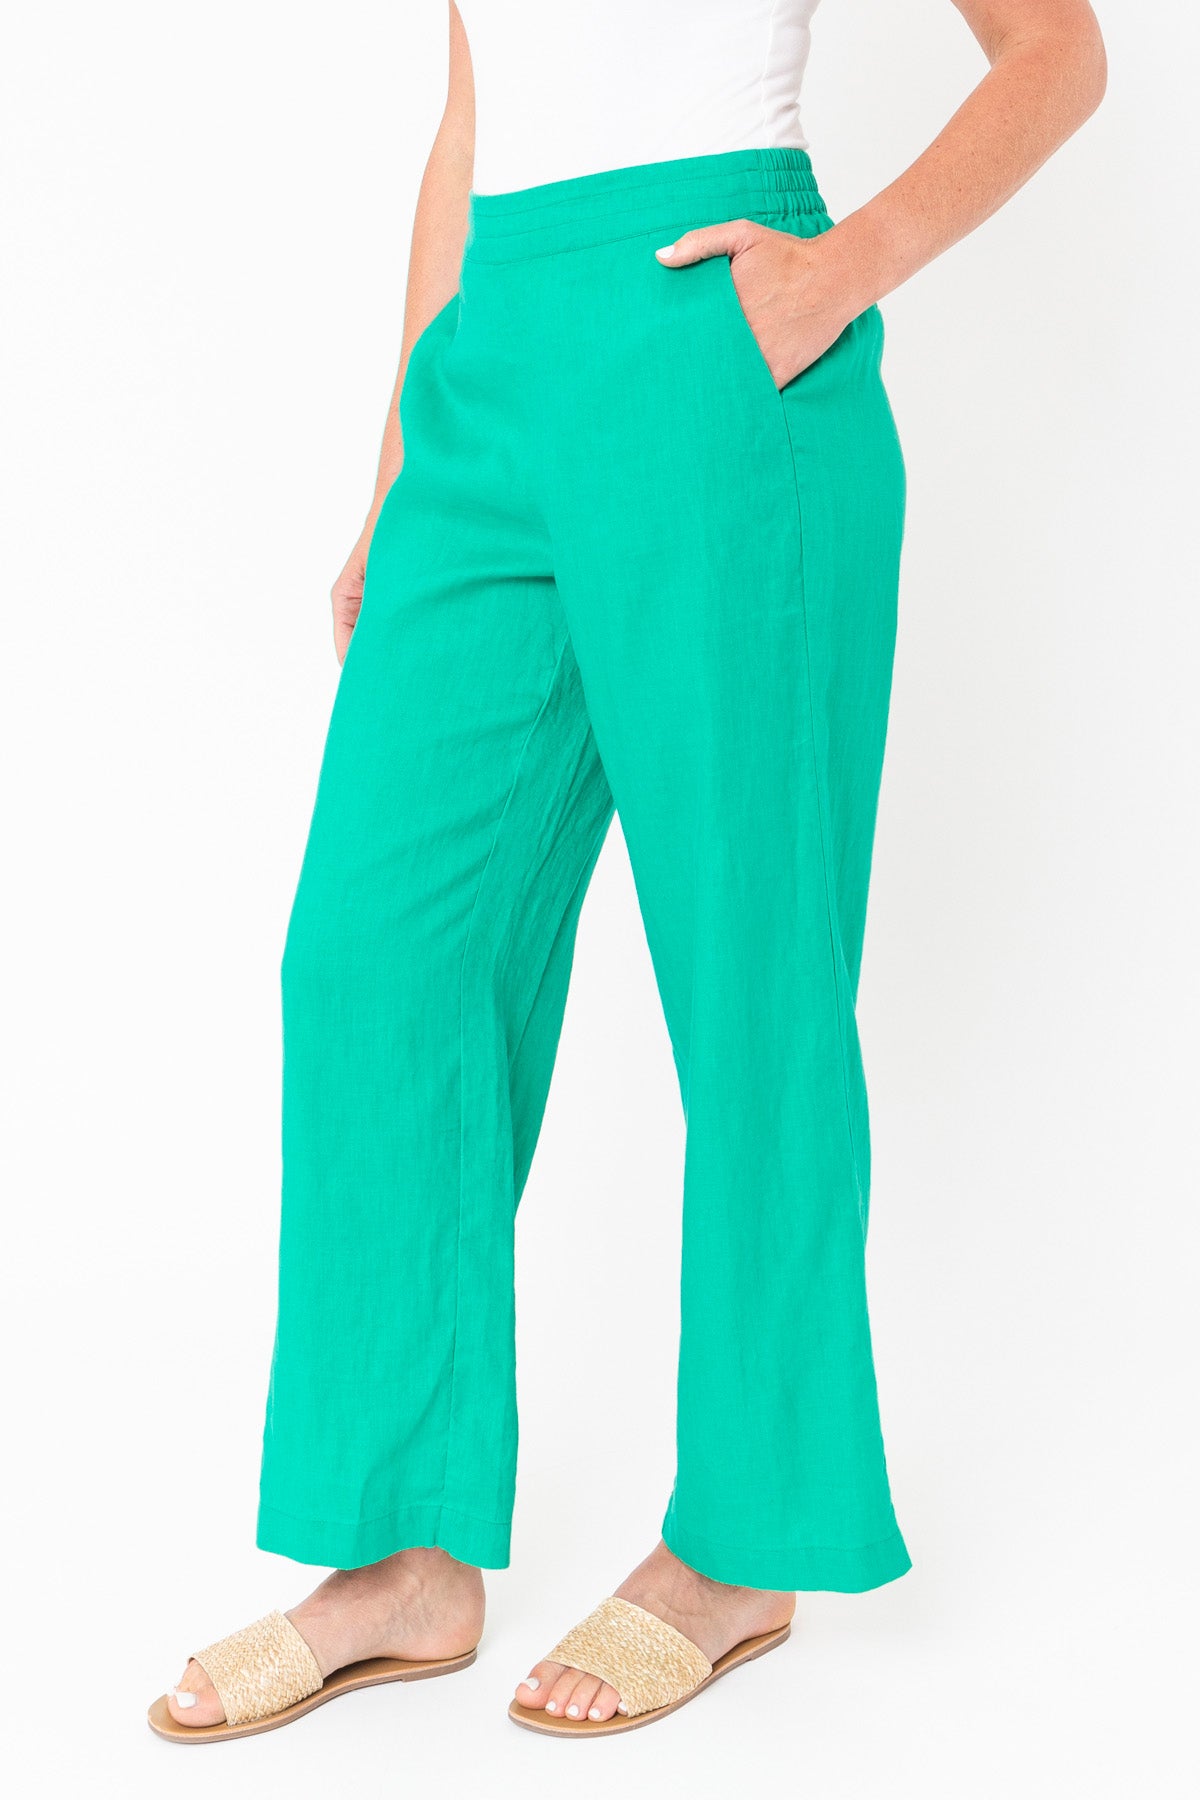 IXIMO Women's Cotton Linen Pants Casual Baggy Elastic Waist Relax Fit  Trousers Slacks KZ76 Beige S at Amazon Women's Clothing store